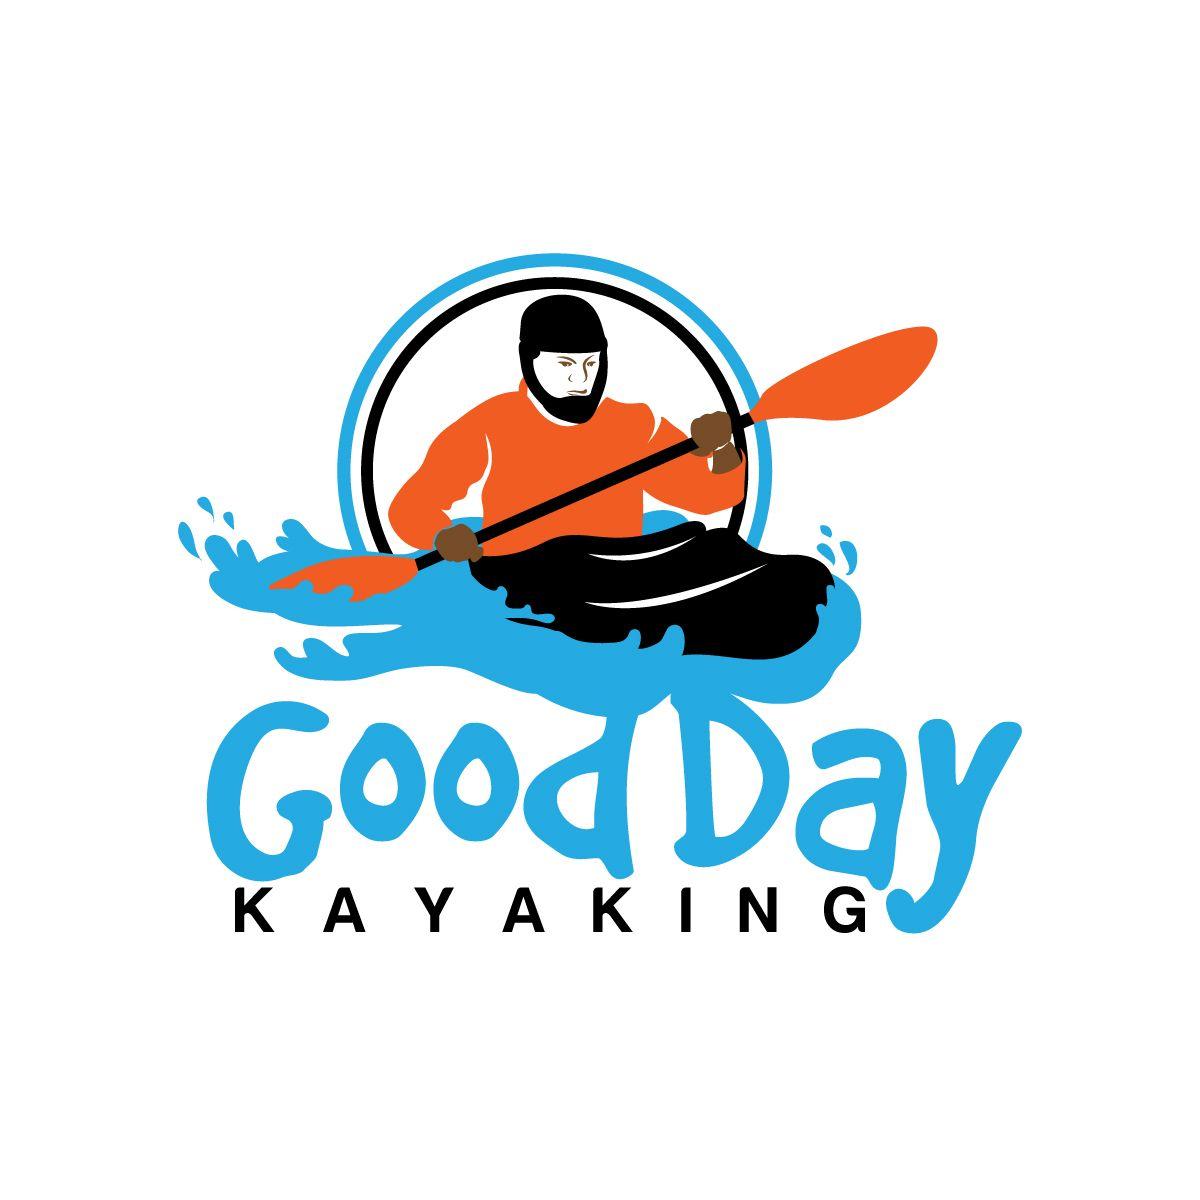 Kayaking Logo - Bold, Playful Logo Design for Good Day Kayaking by Kreative Fingers ...